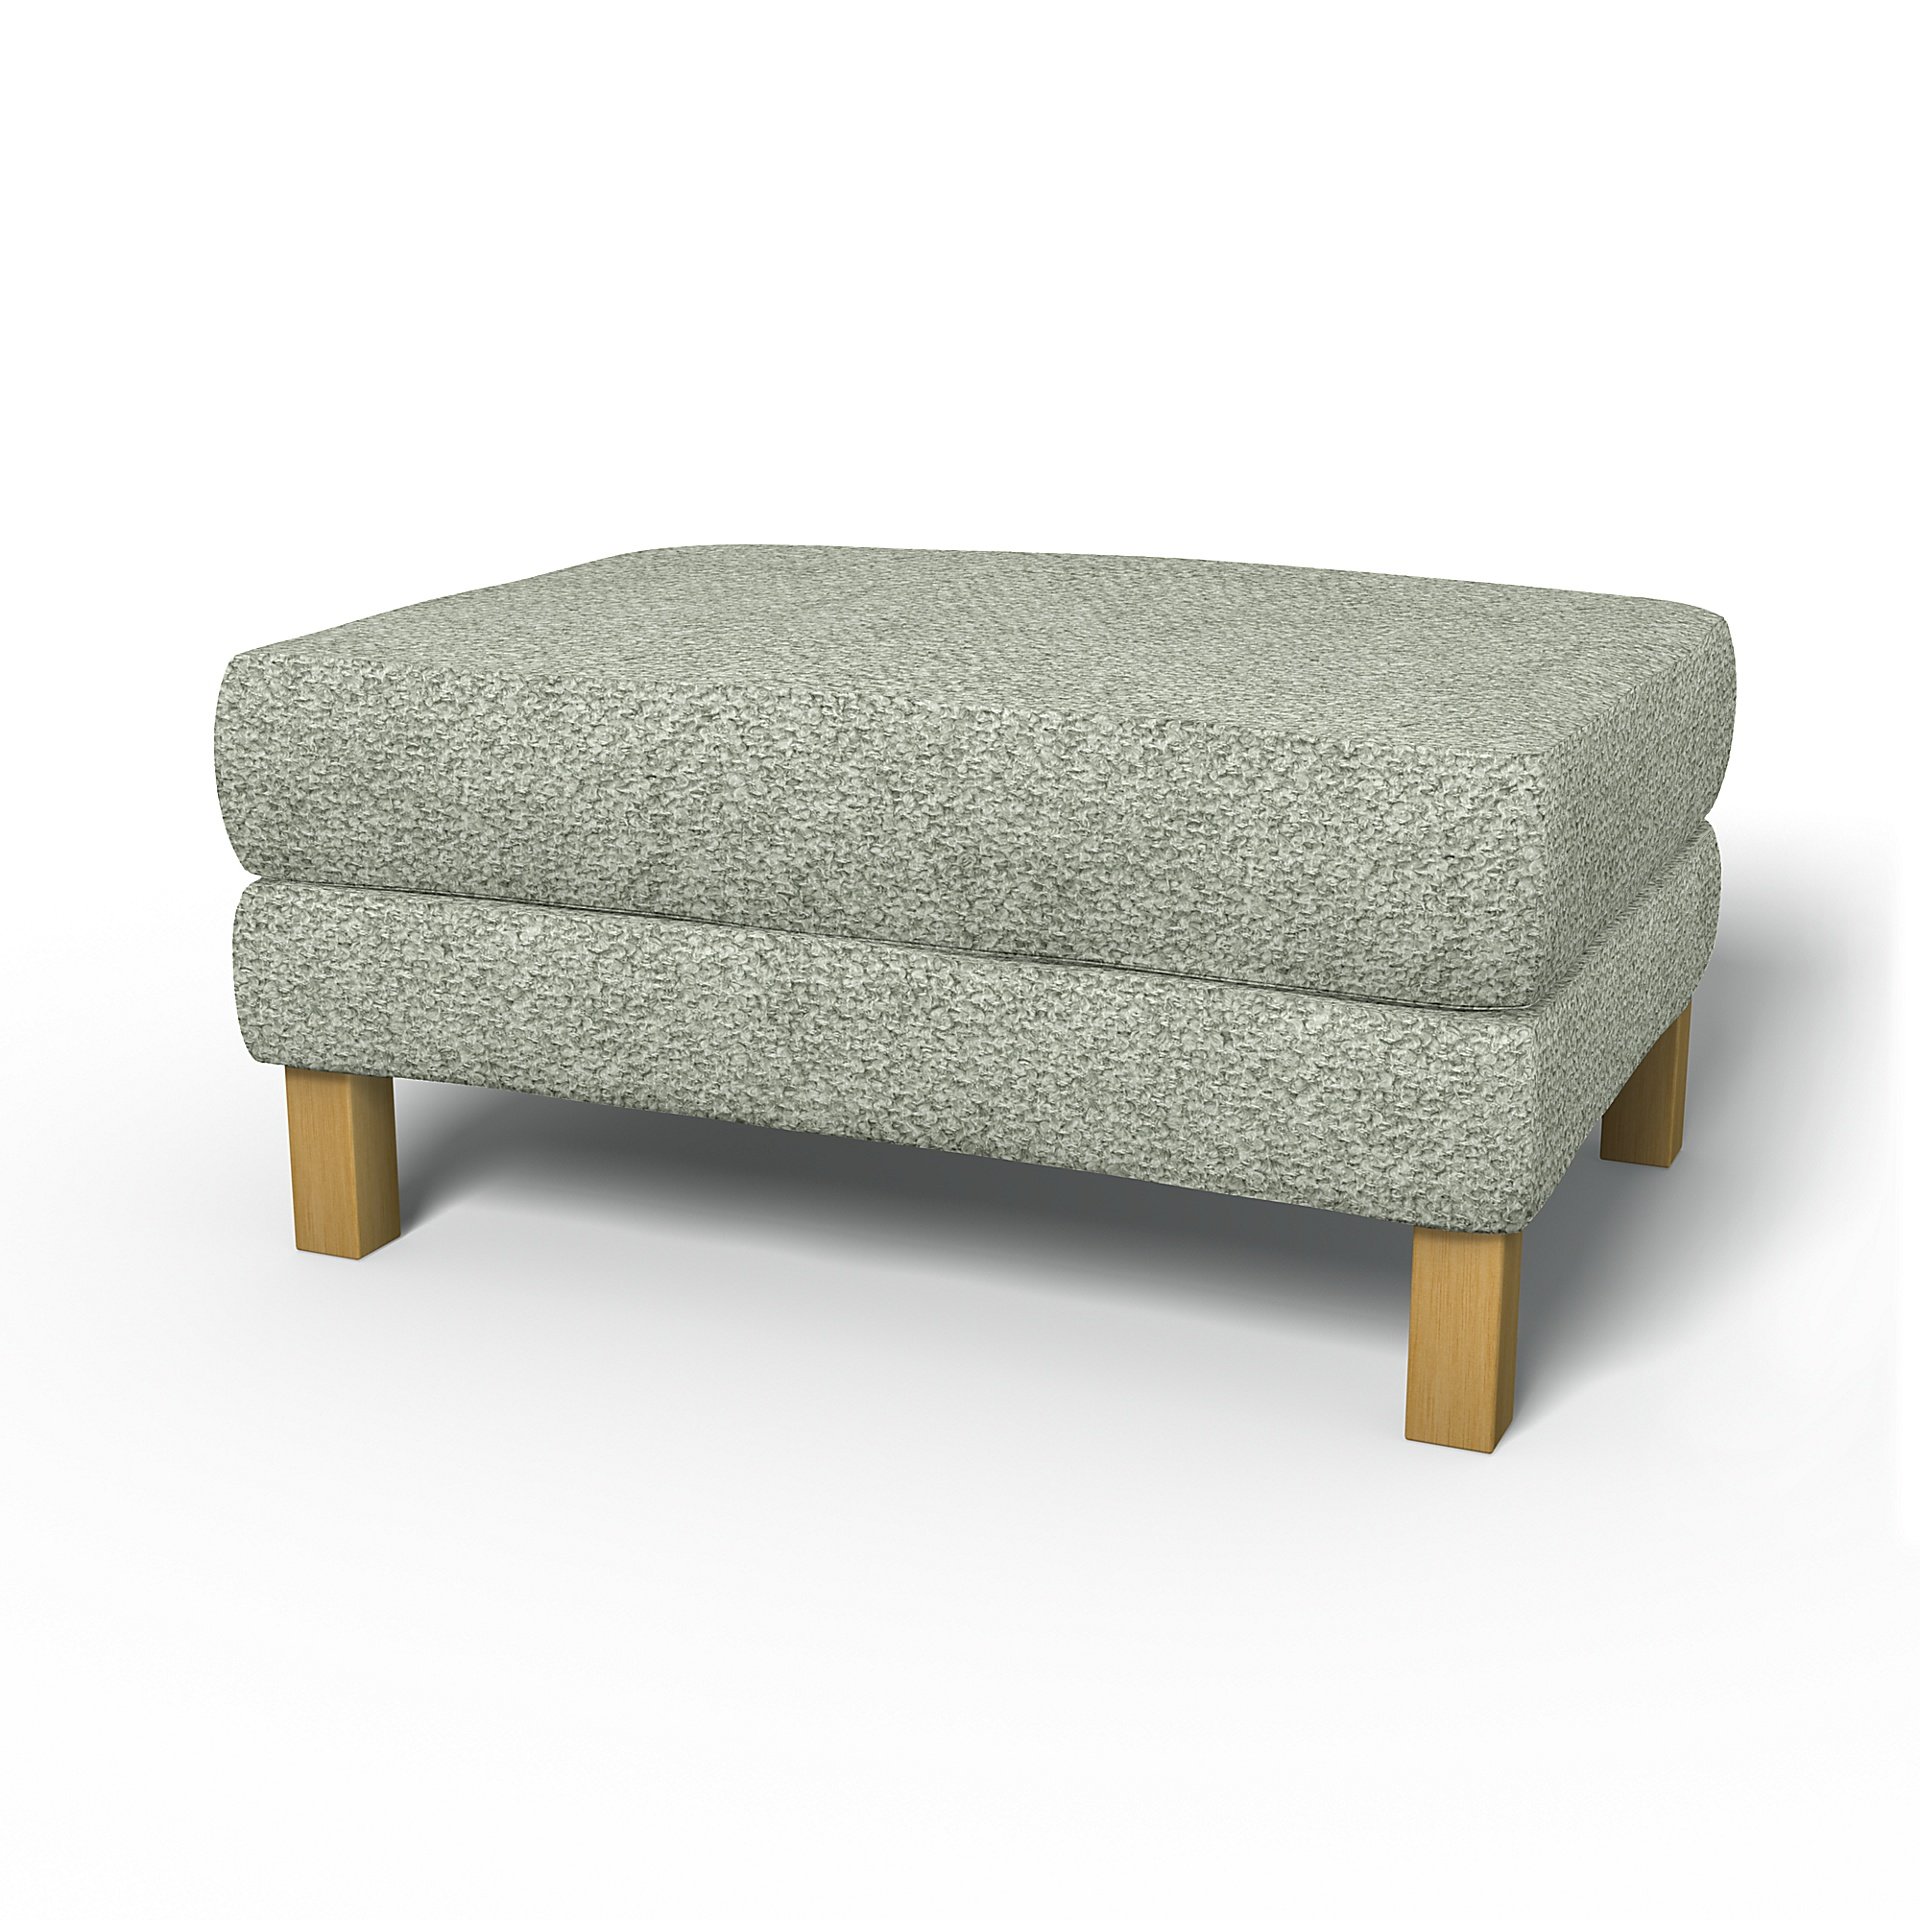 IKEA - Karlstad Footstool Cover, Pistachio, Boucle & Texture - Bemz